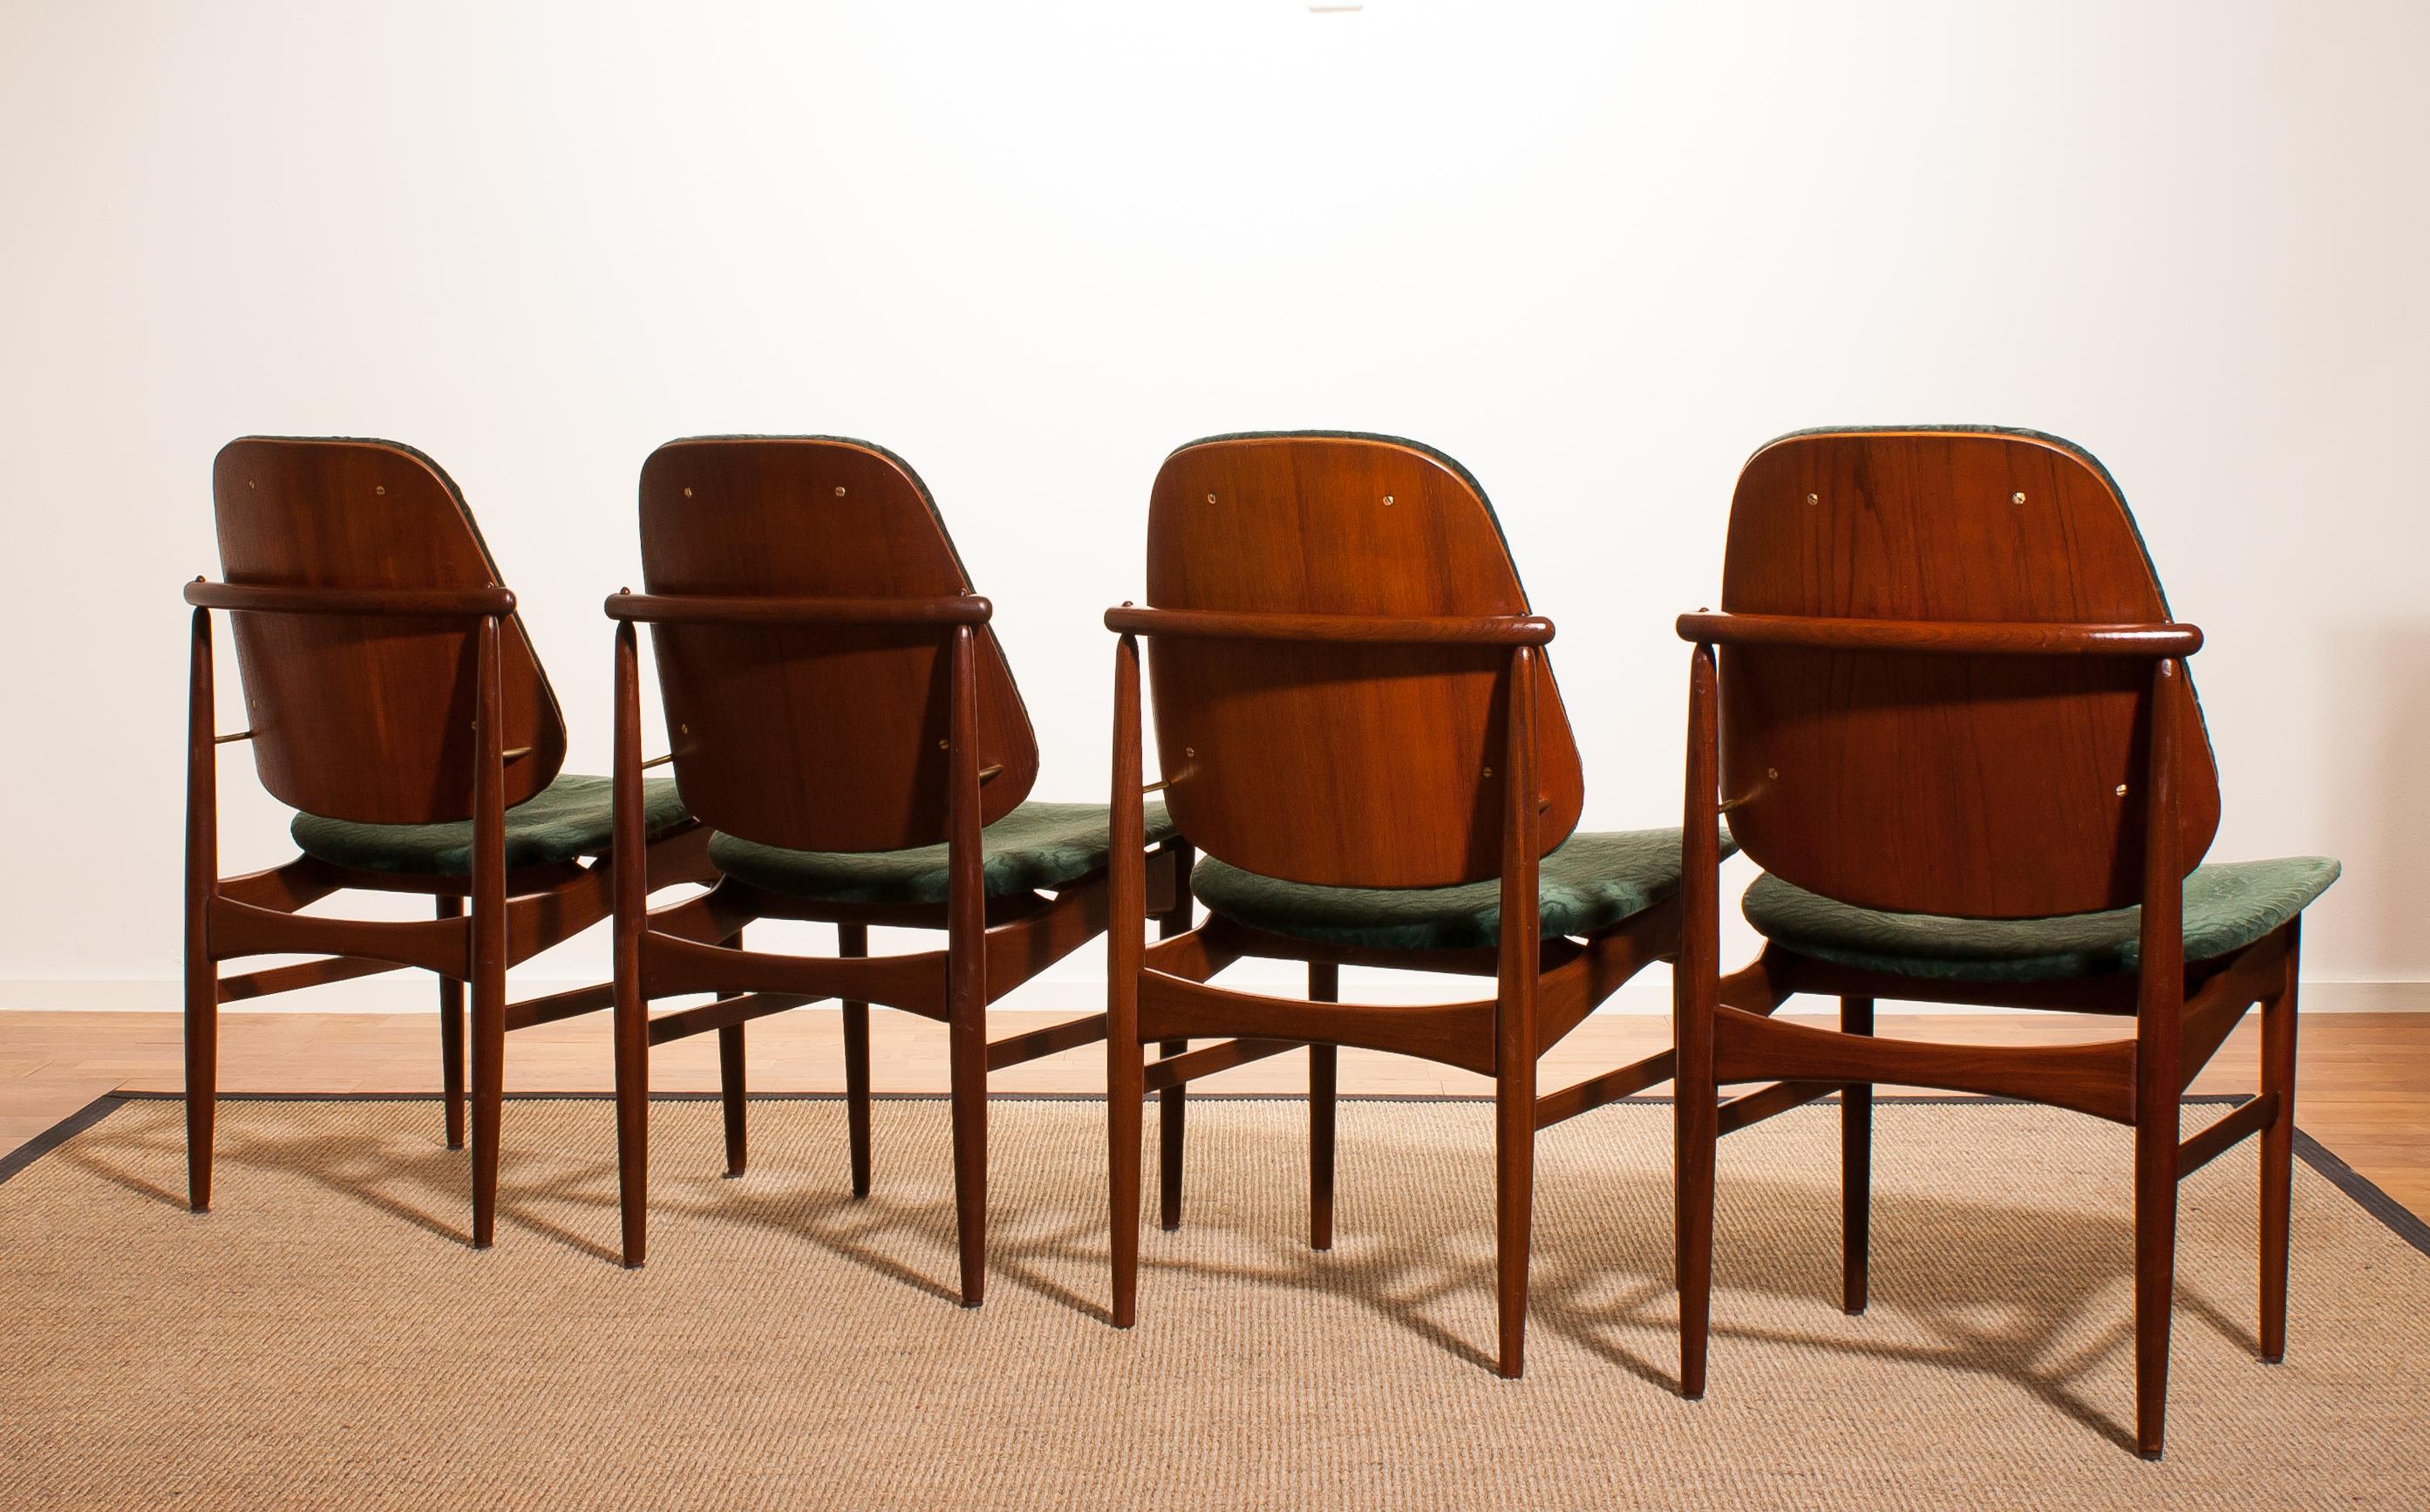 Mid-20th Century 1950s, Set of Four Teak Dining Chairs by Arne Vodder for France & Daverkosen